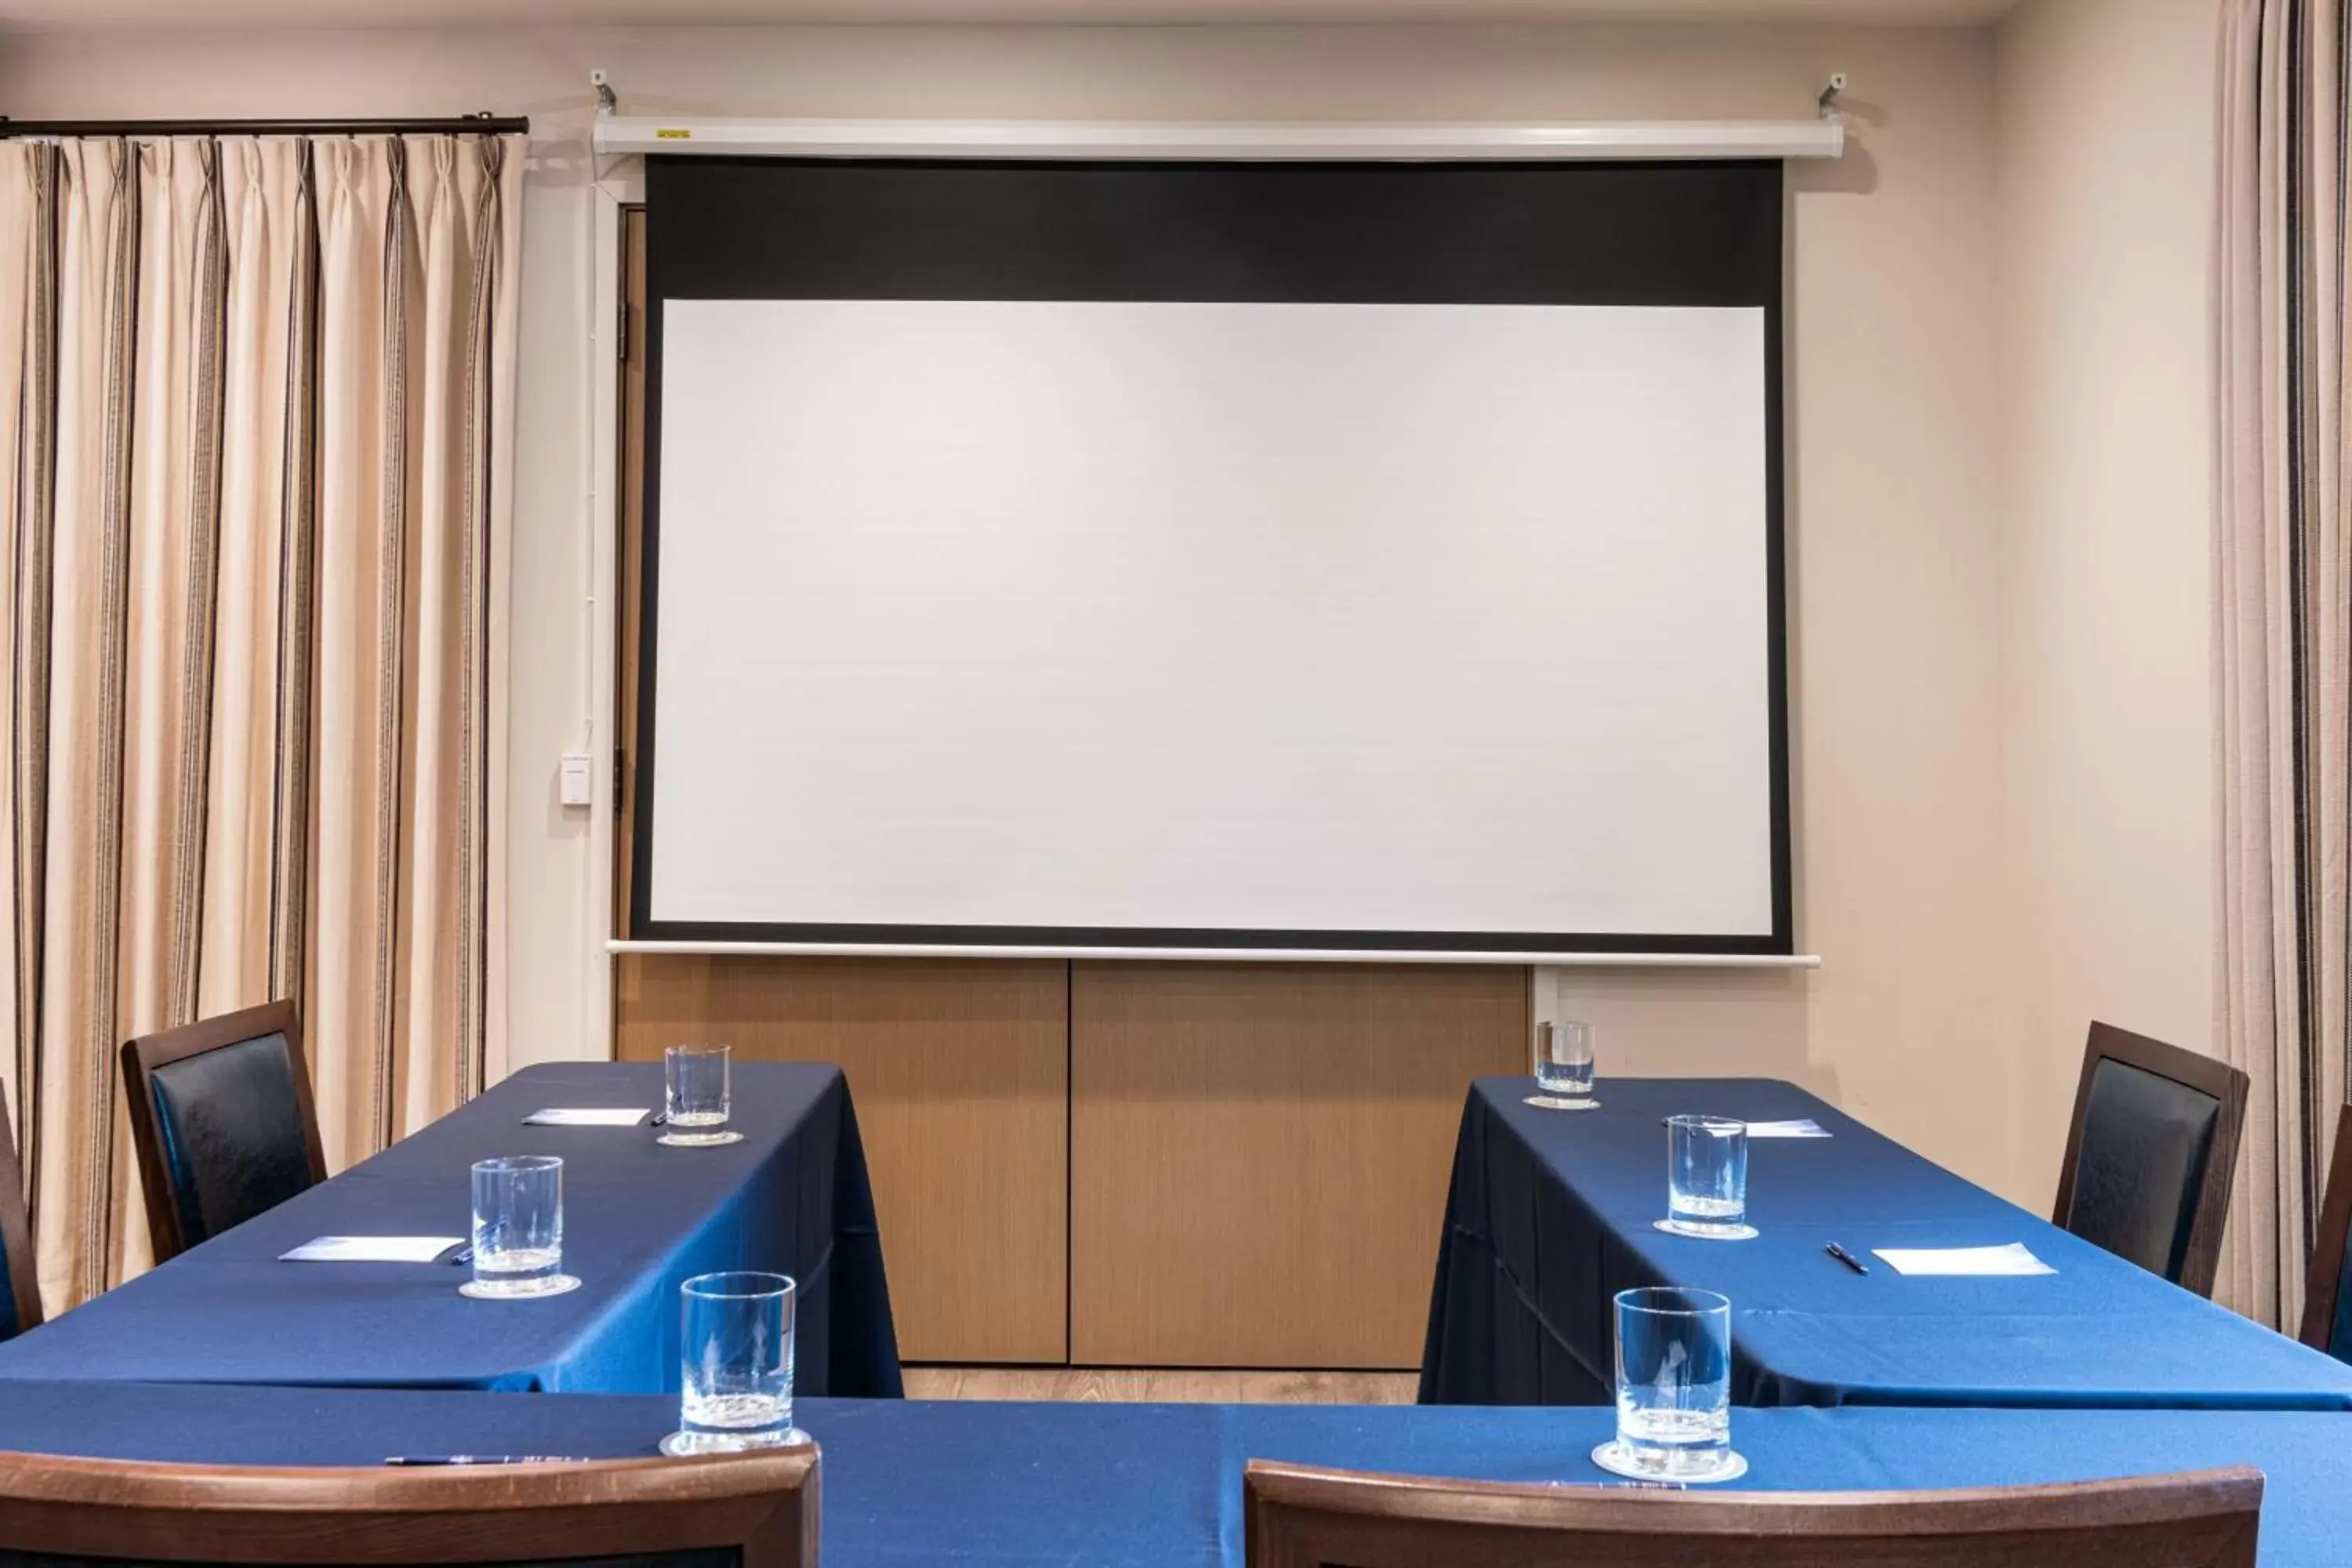 Meeting/conference room in Sky Rock Sedona